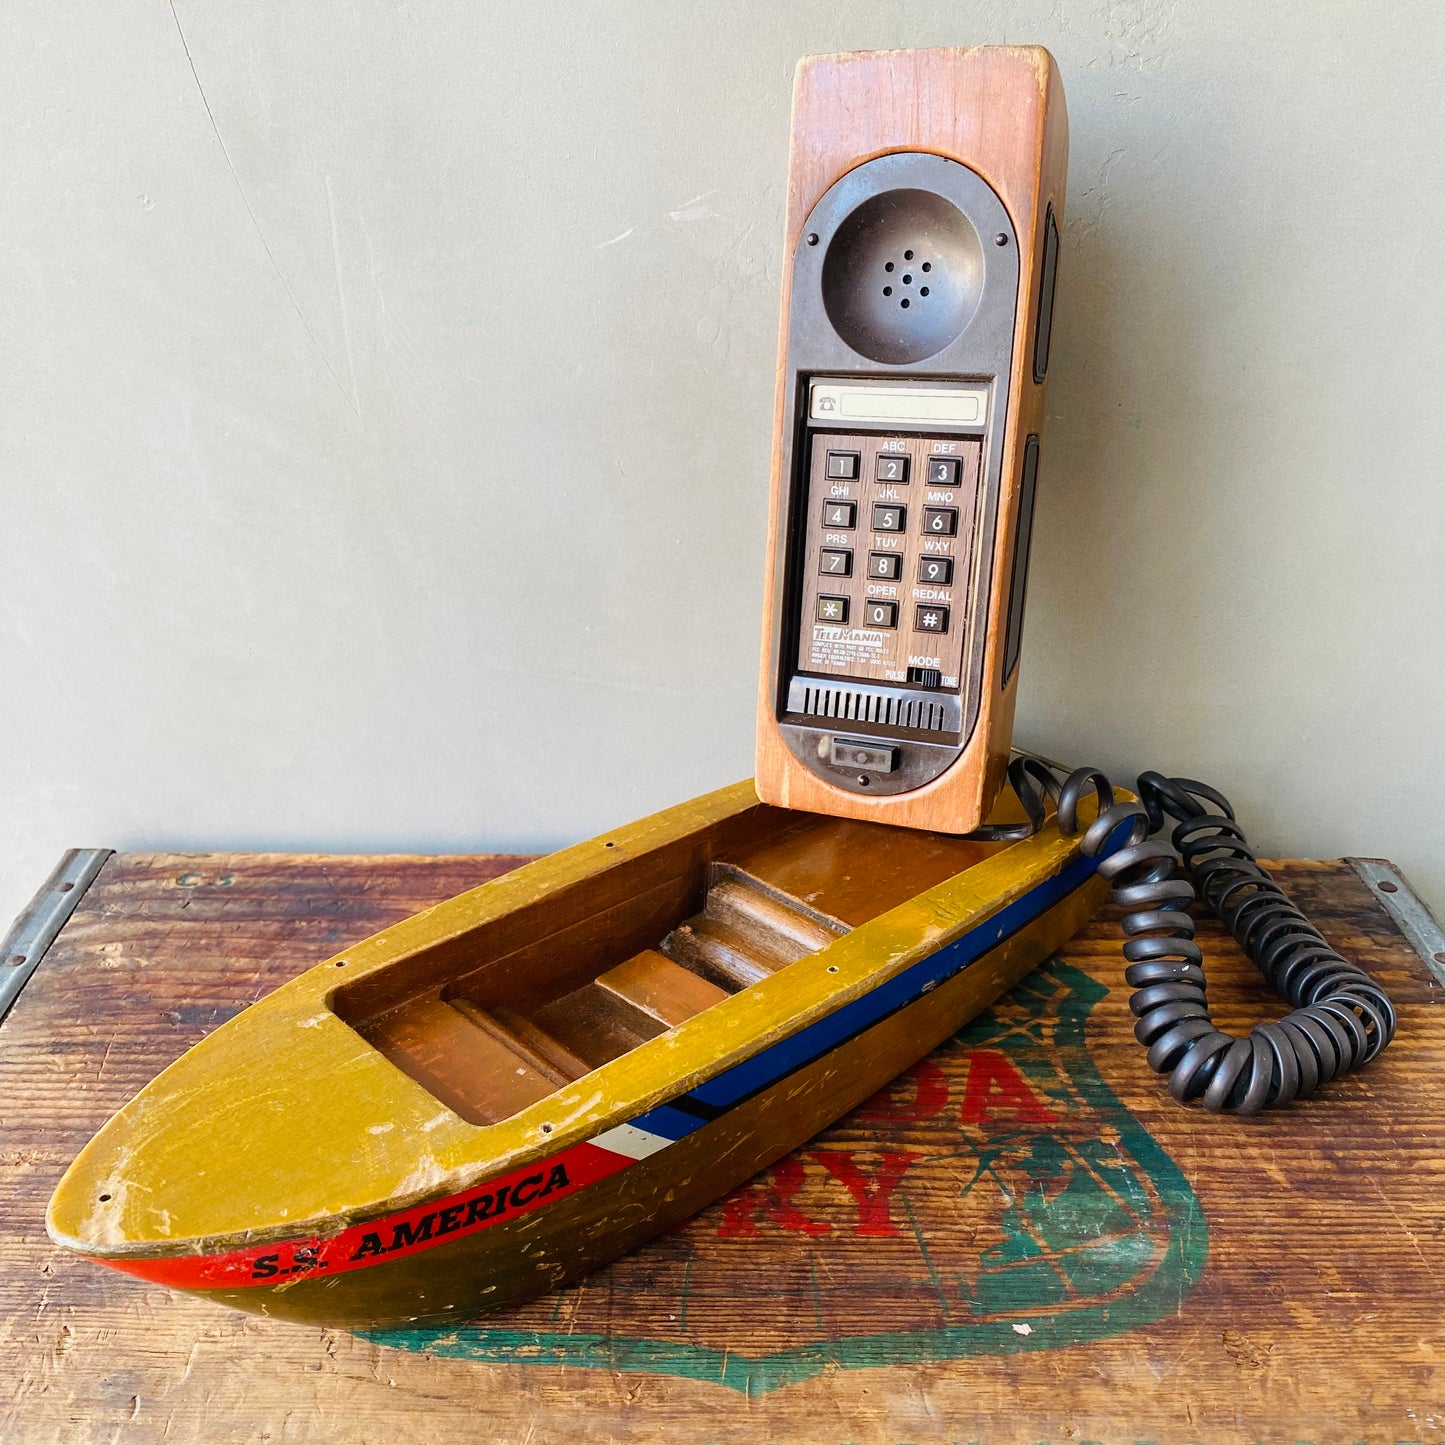 【1980s vintage】S.S.AMERICA boat telephone